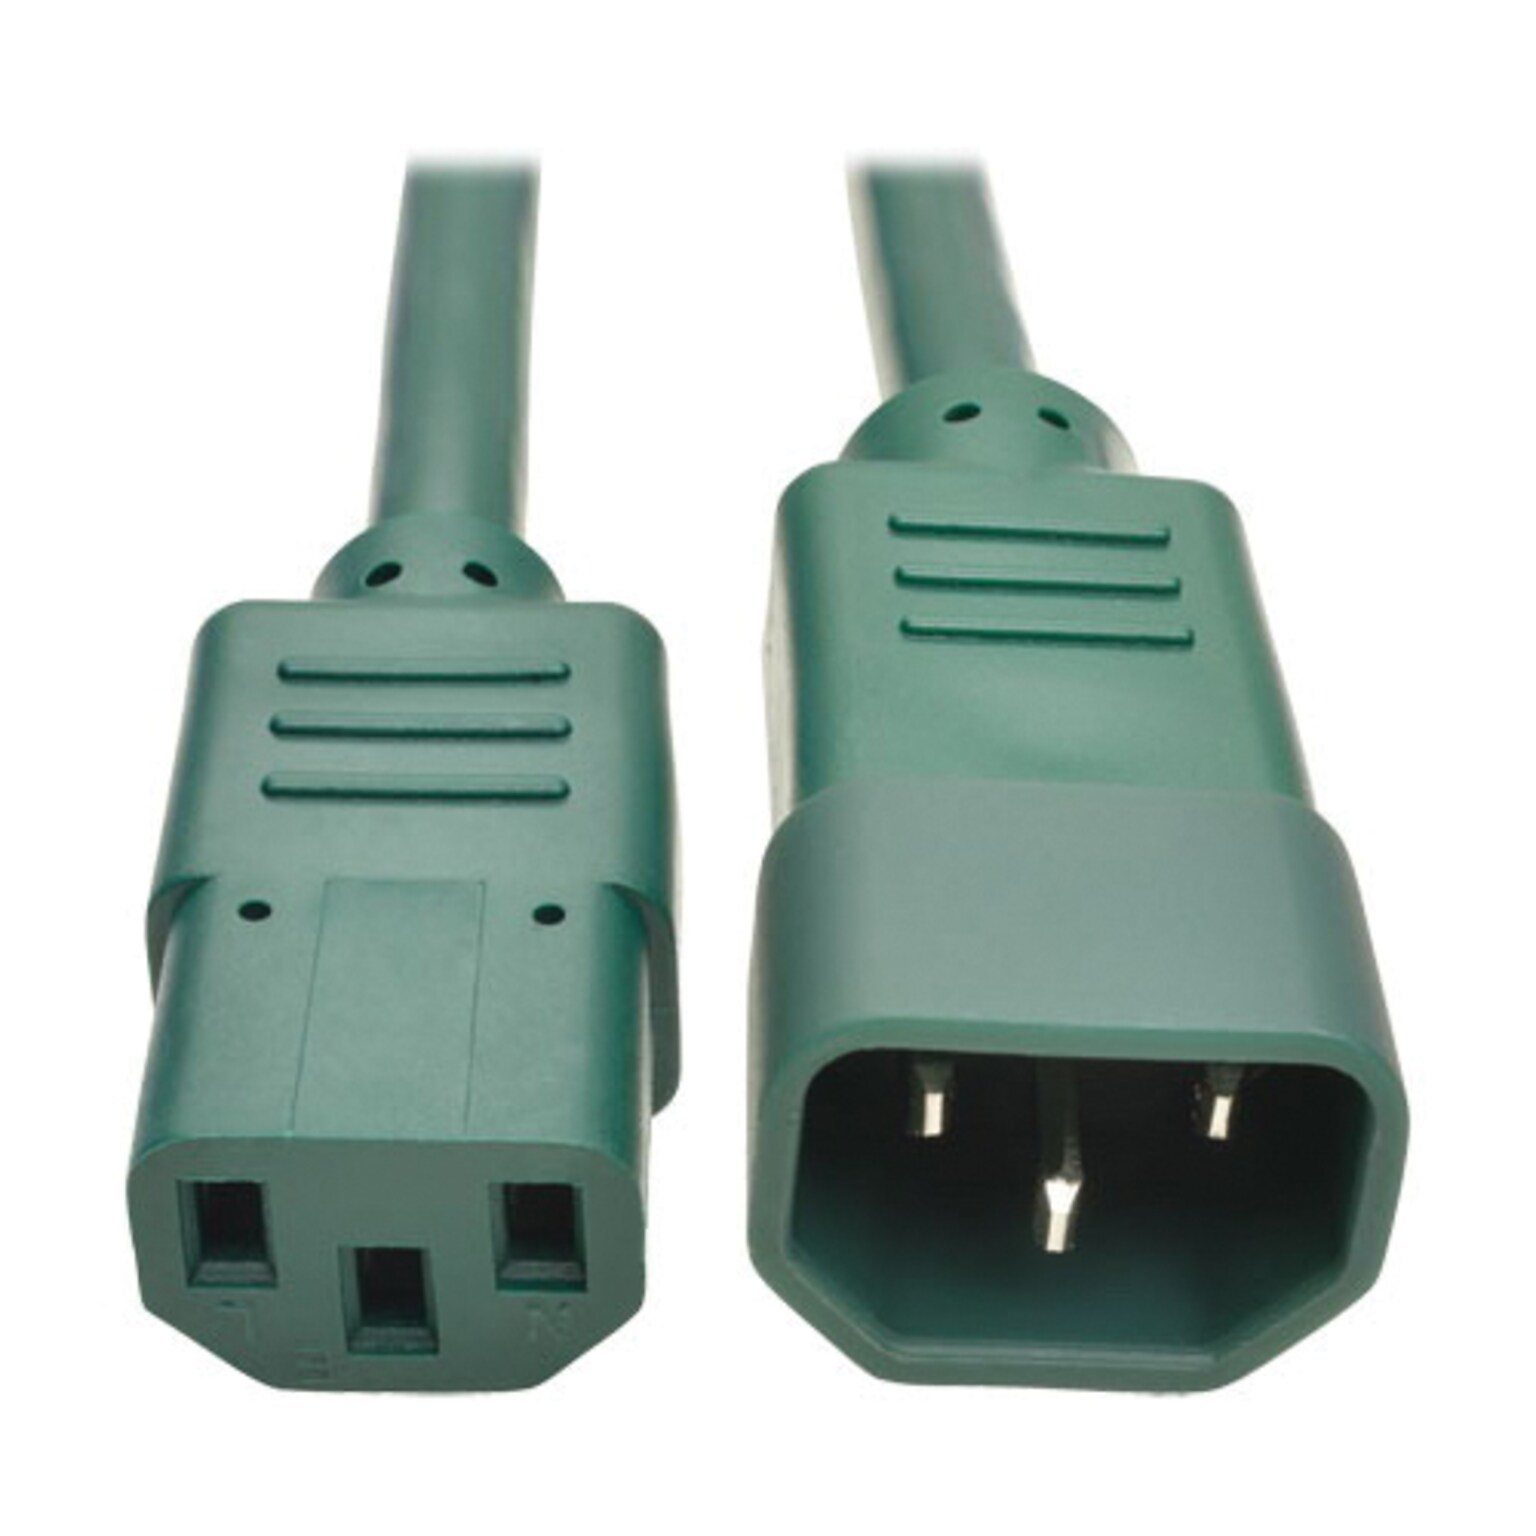 Tripp Lite 3 IEC-320-C13 to IEC-320-C14 Female/Male Heavy-Duty Power Extension Cord, Green (P005-003-AGN)